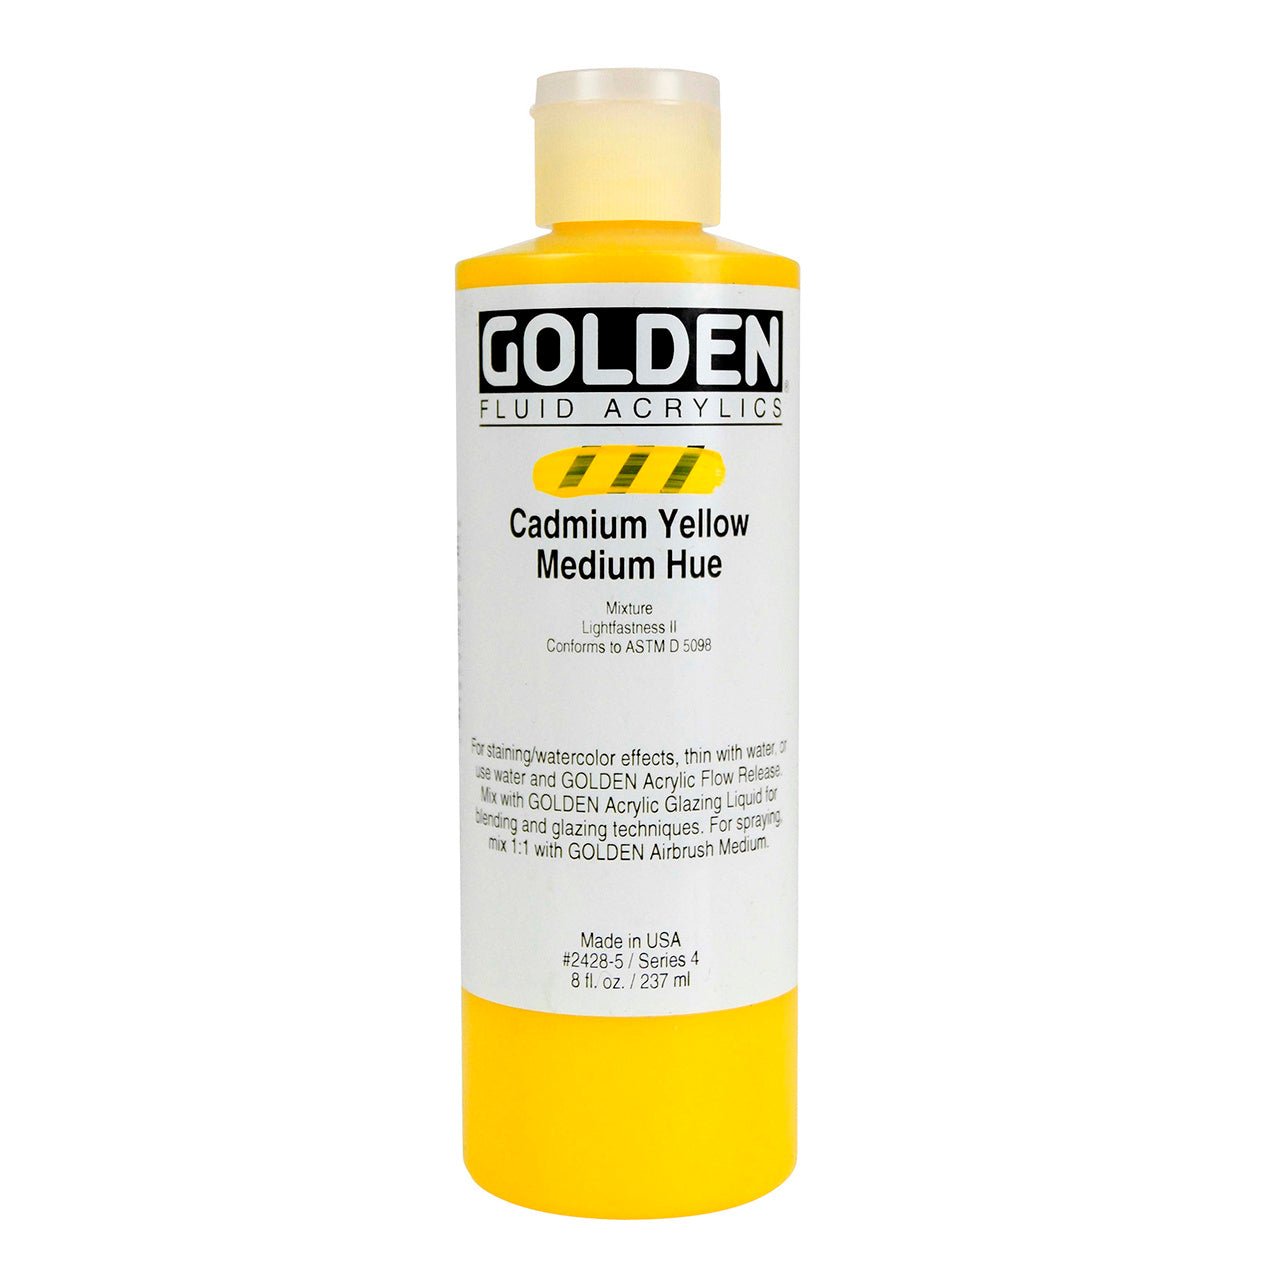 Golden Fluid Acrylic Cadmium Yellow Medium Hue 8 oz - merriartist.com